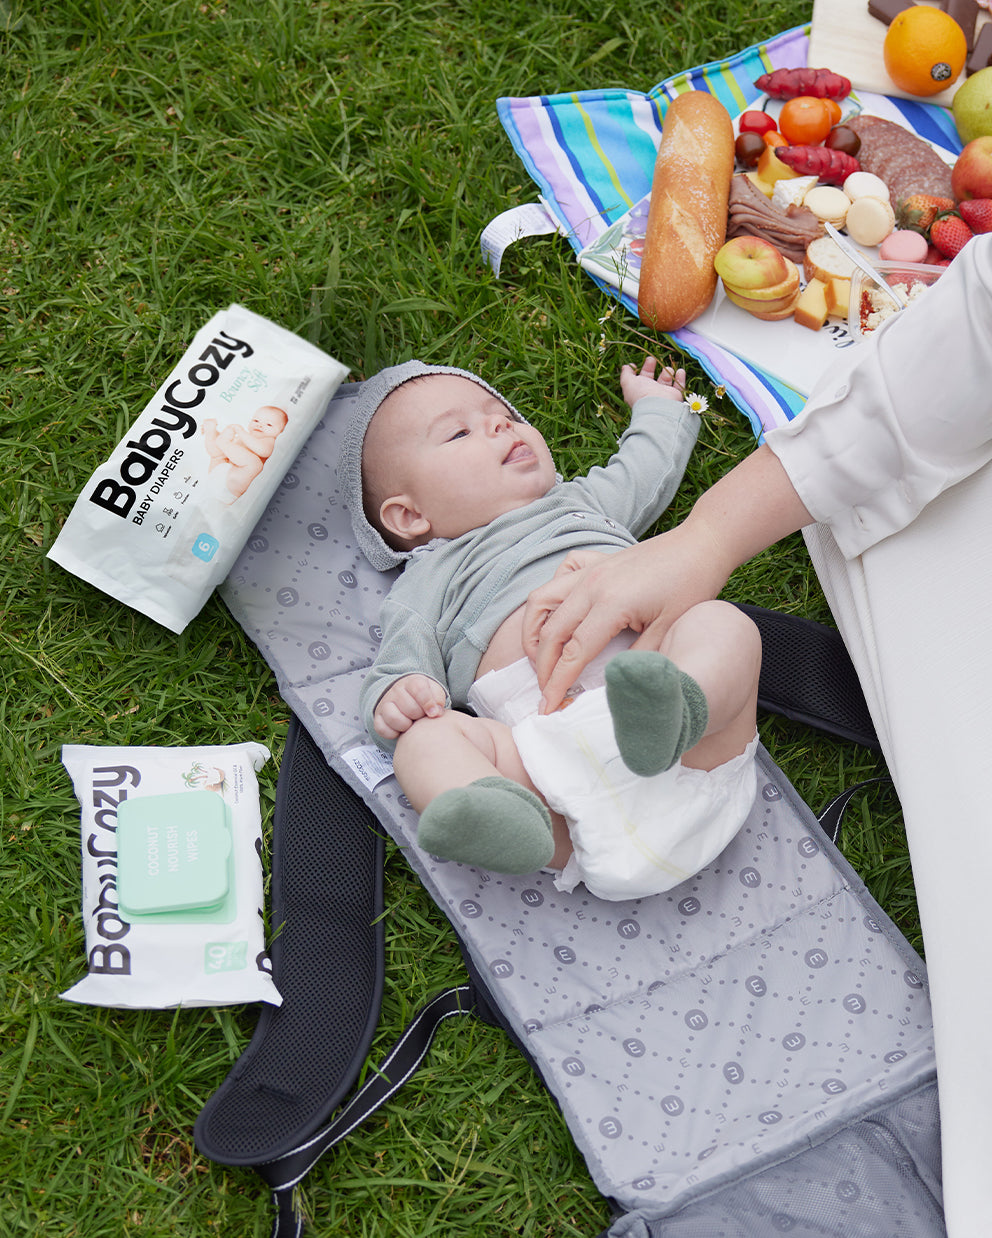 Diapers babycozy - Mixpacks de bébé étapes